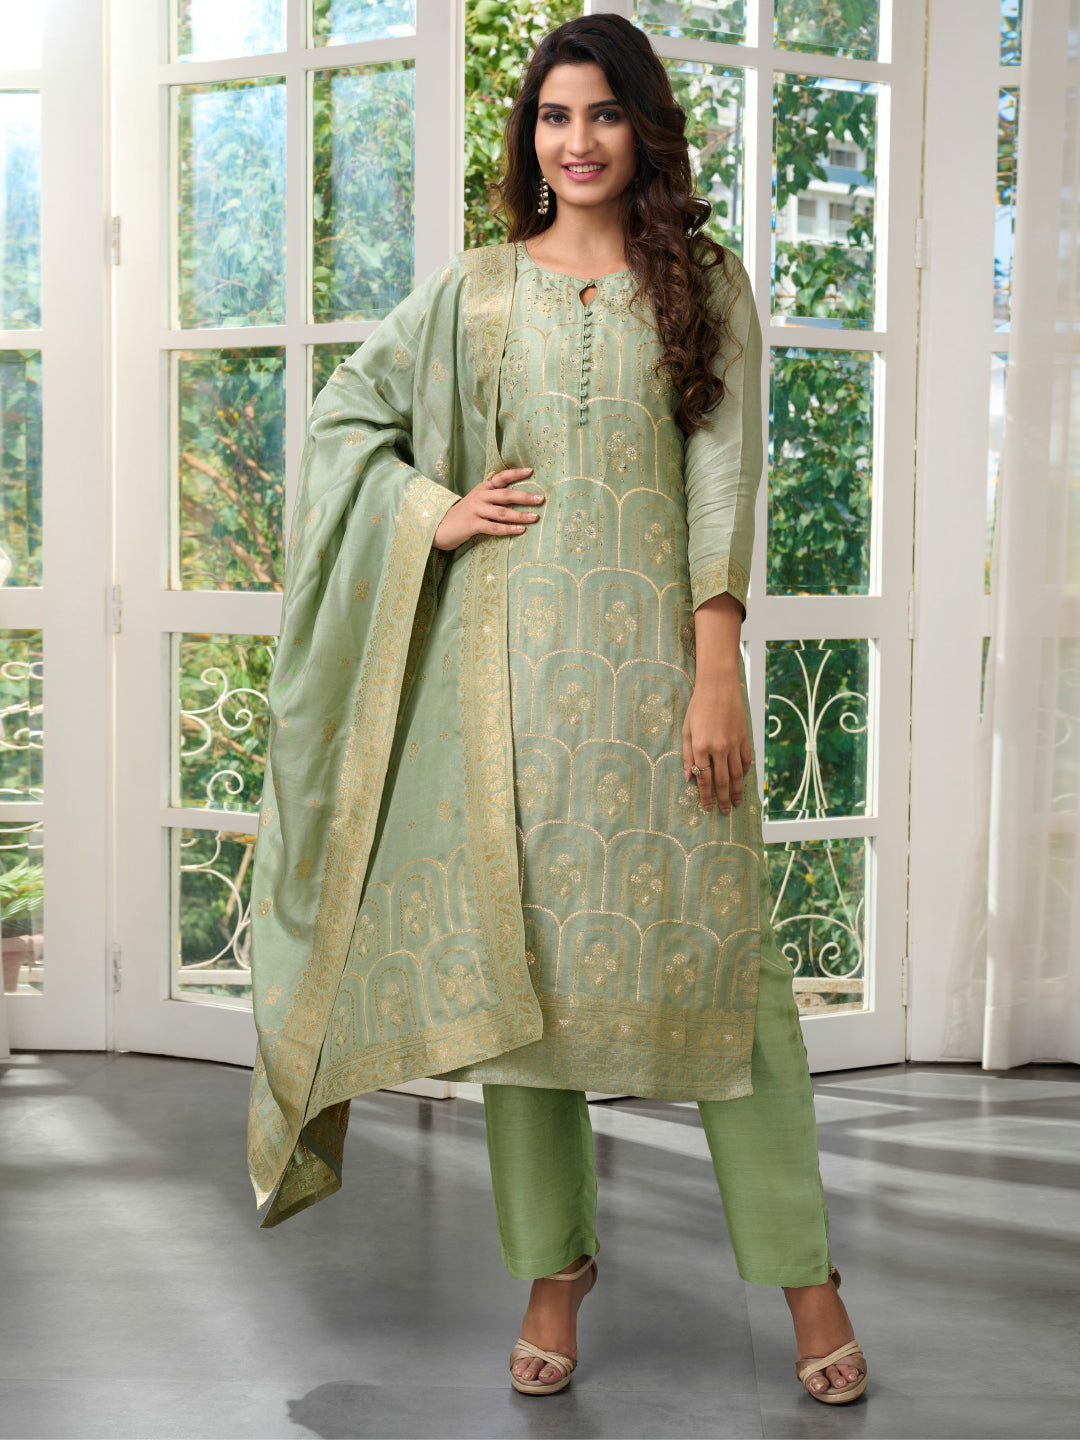 Punjabi Patiala Bollywood Designer Indian Embroidery full sequin SALWAR  KAMEEZ | eBay | Patiala suit designs, Punjabi suits party wear, Patiyala  dress